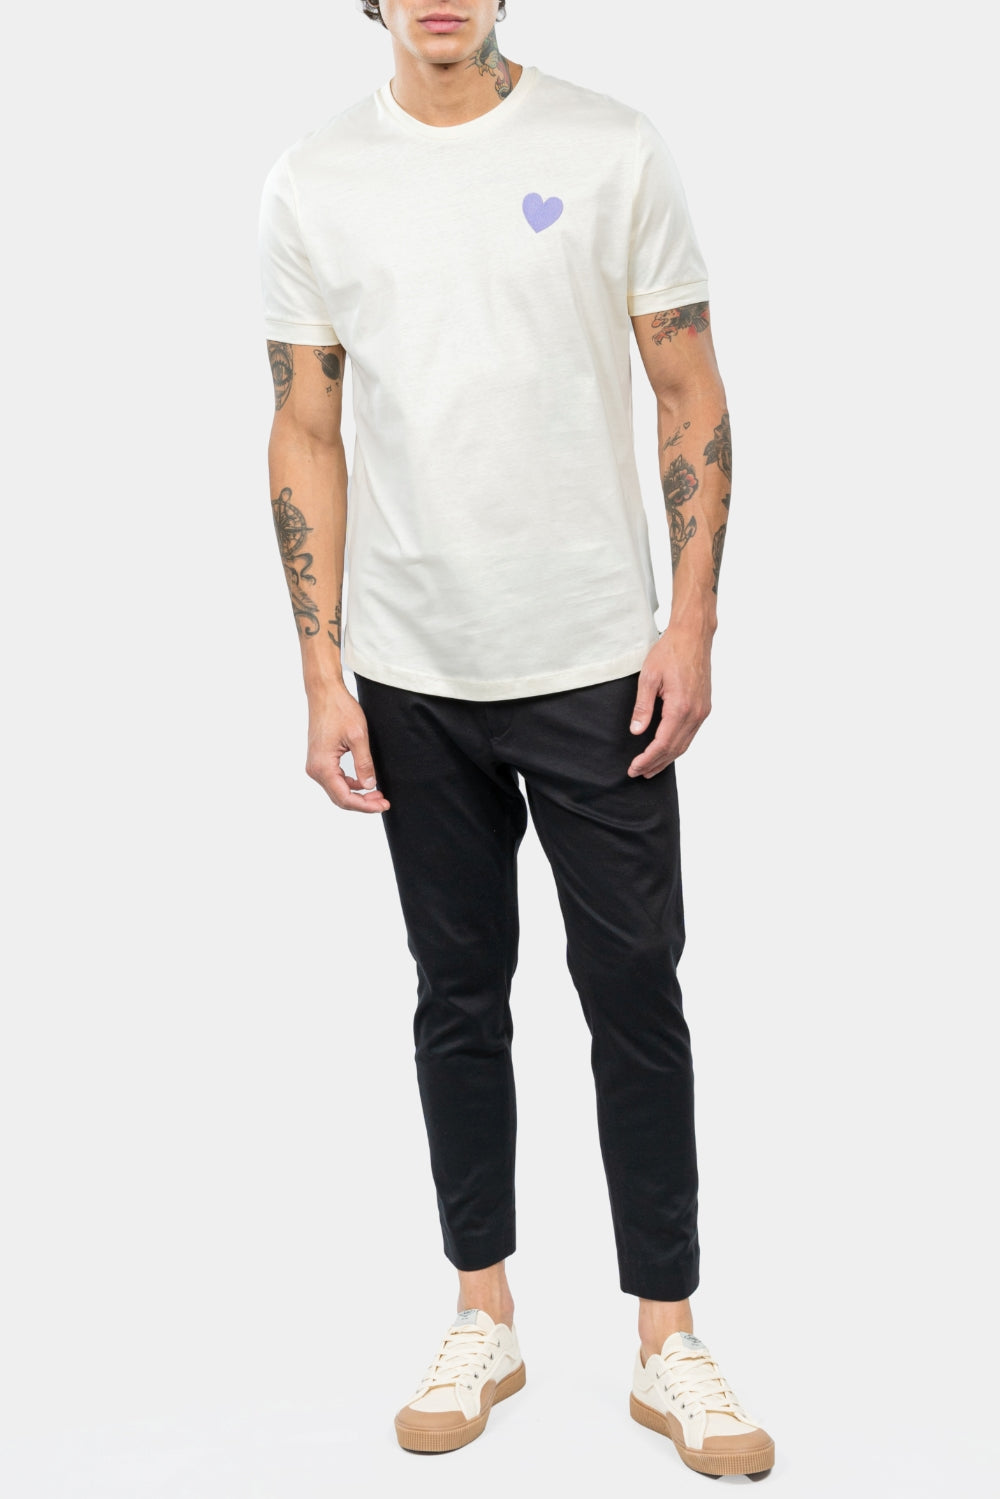 INIMIGO Classic Heart White Regular Fit T-Shirt Menswear